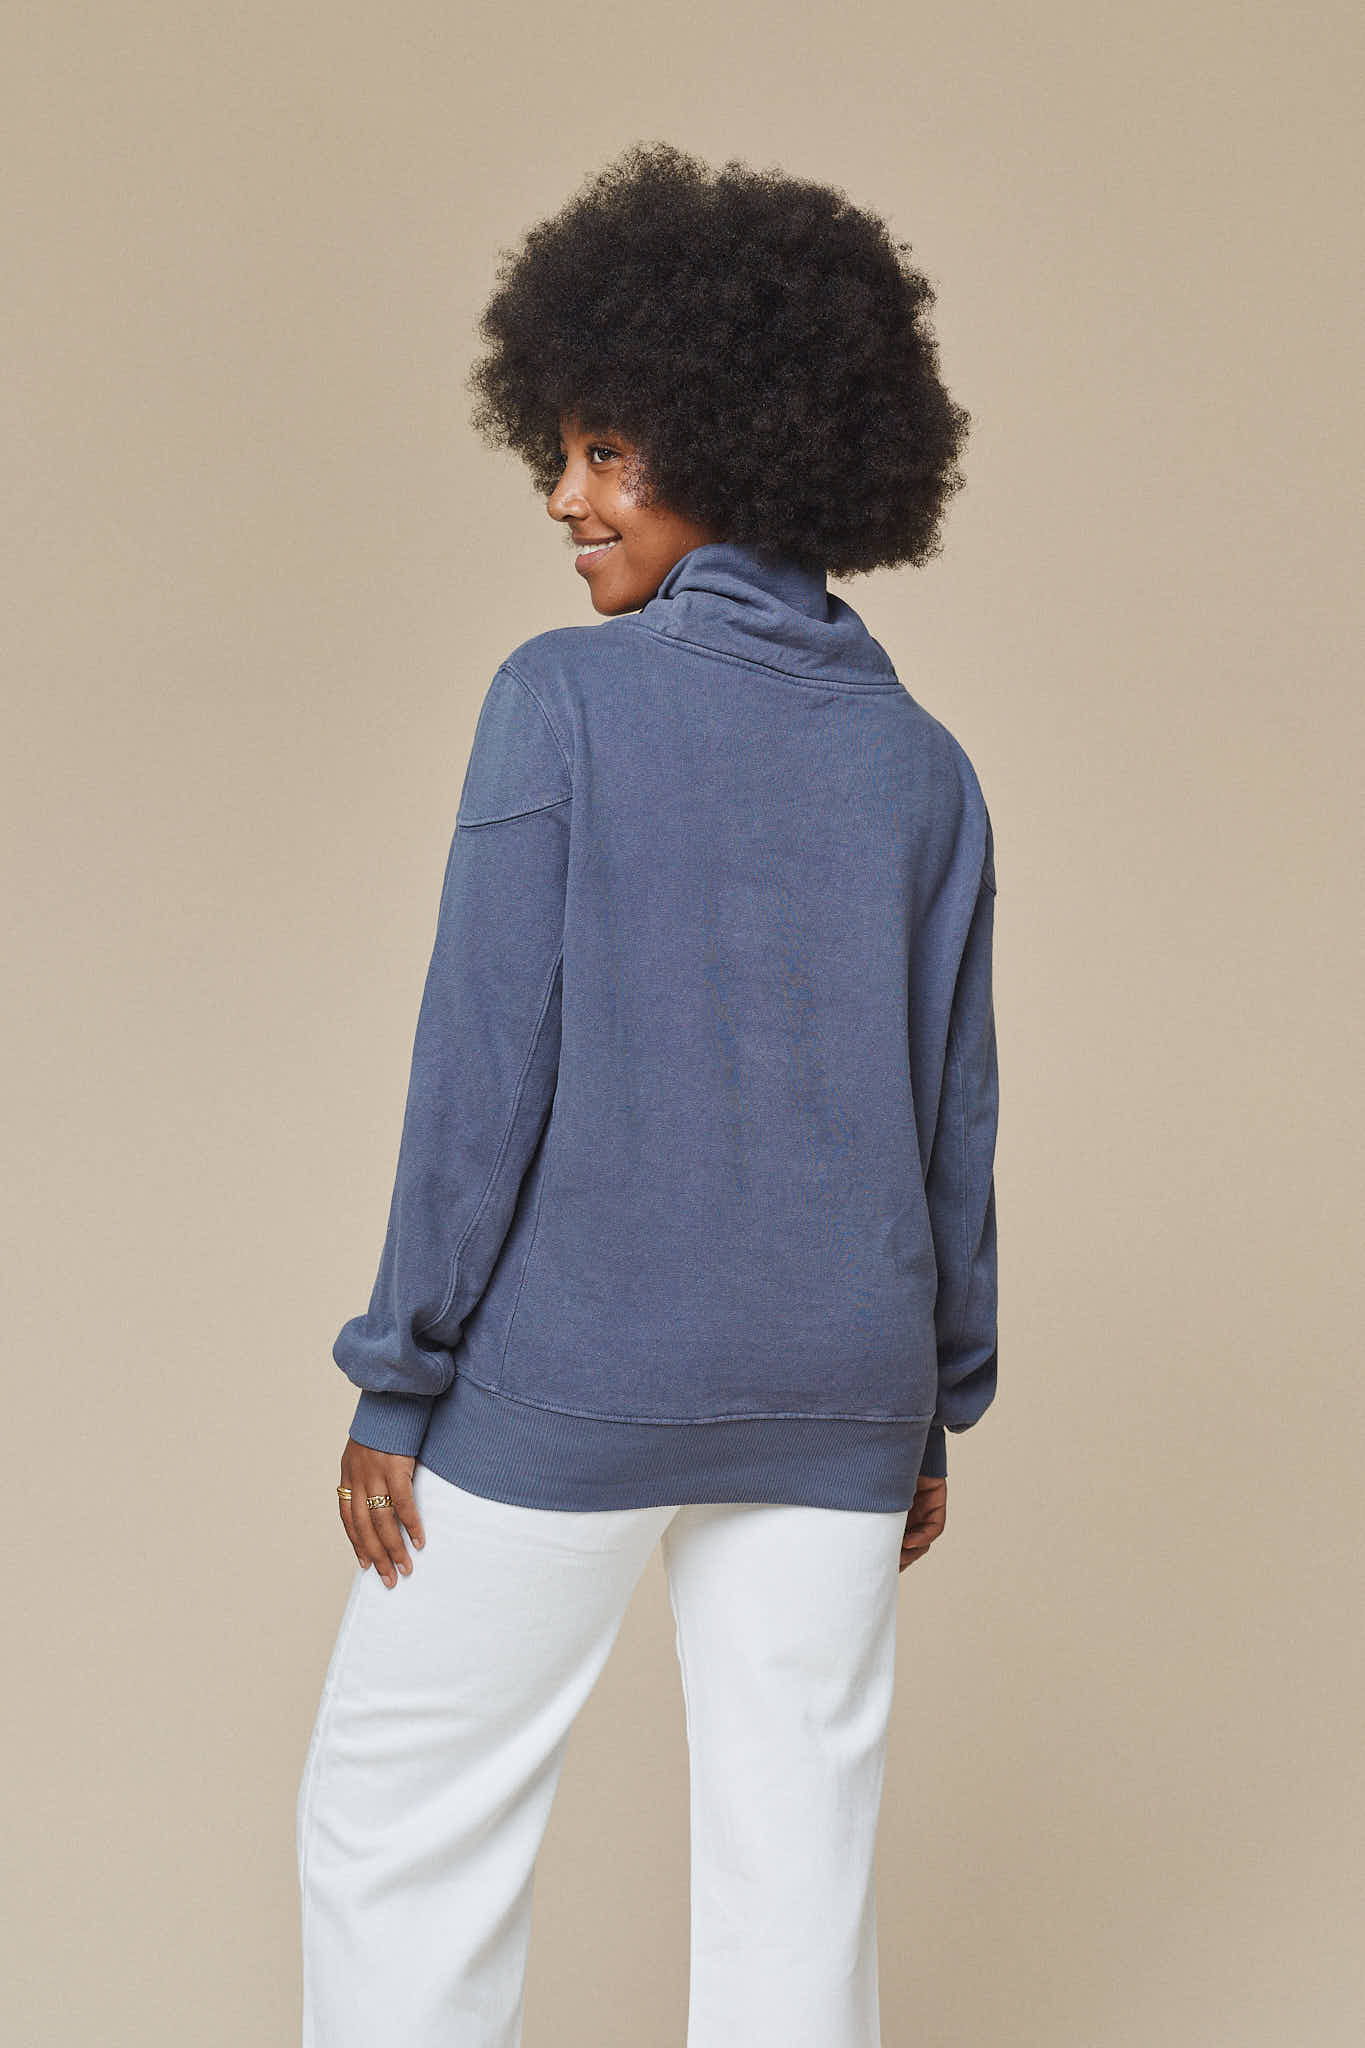 Whittier Sweatshirt | Jungmaven Hemp Clothing & Accessories / Color: